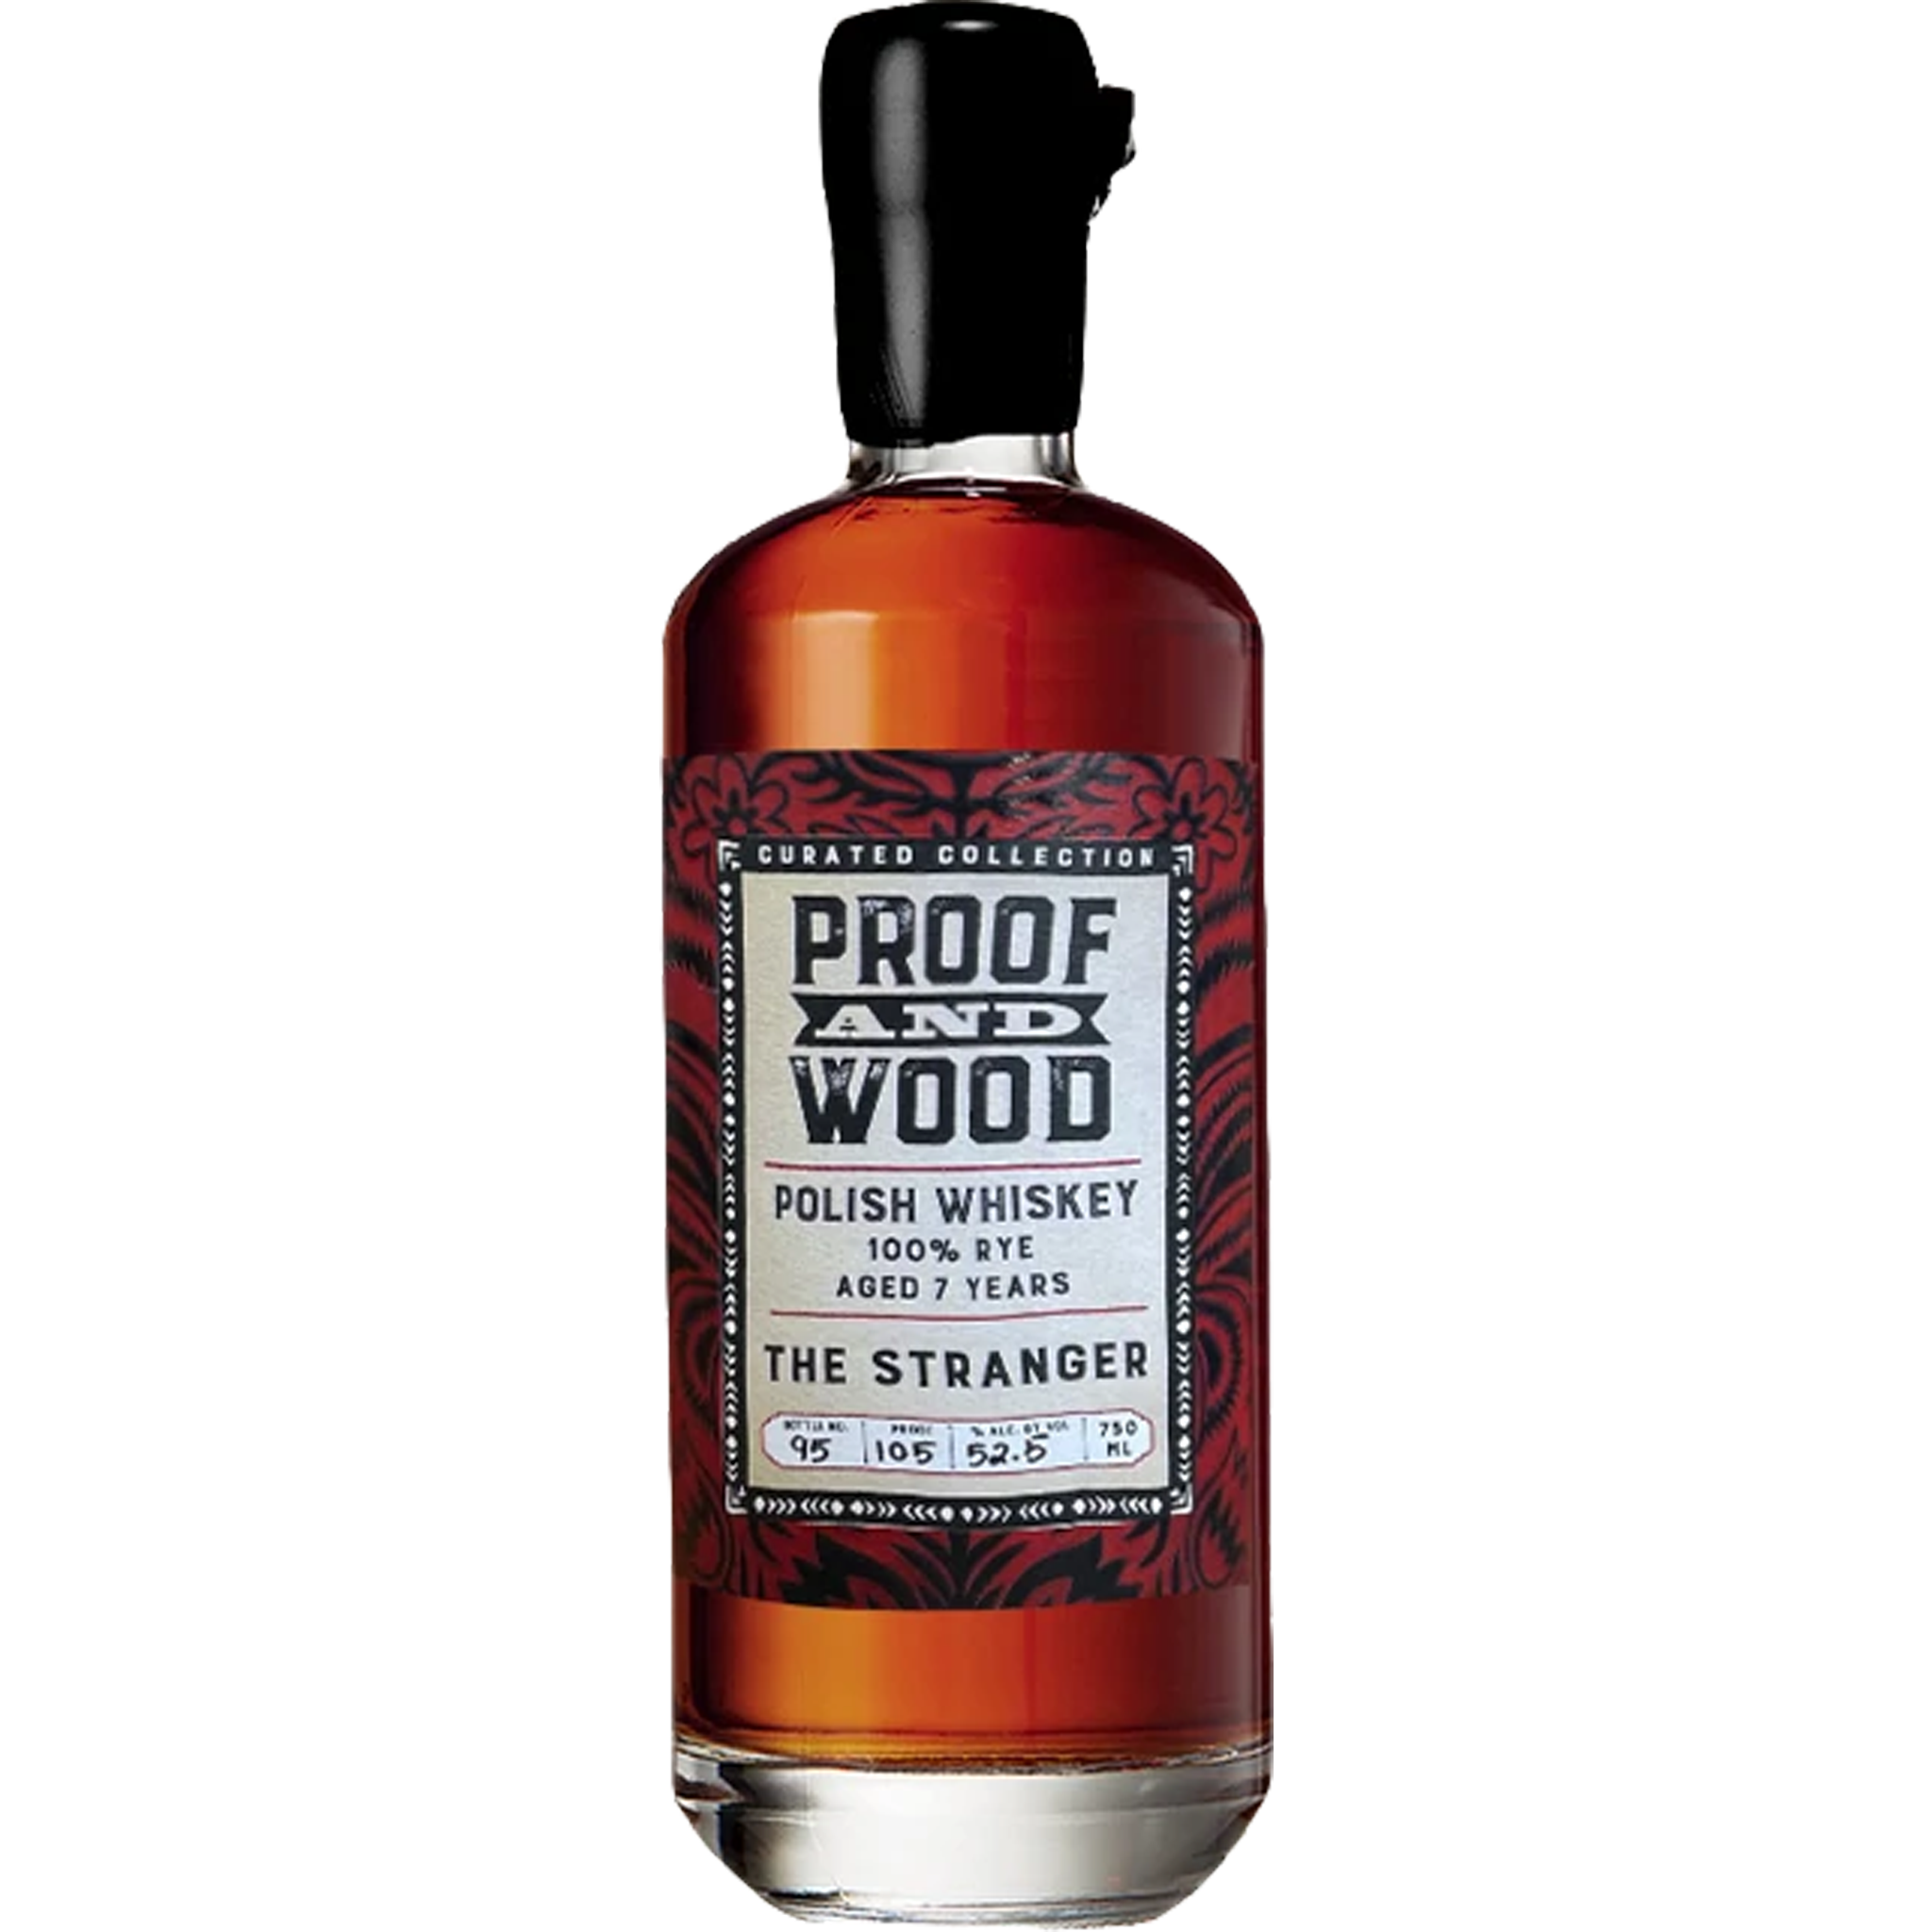 Proof and Wood The Stranger Polish Rye Whiskey 7 Years